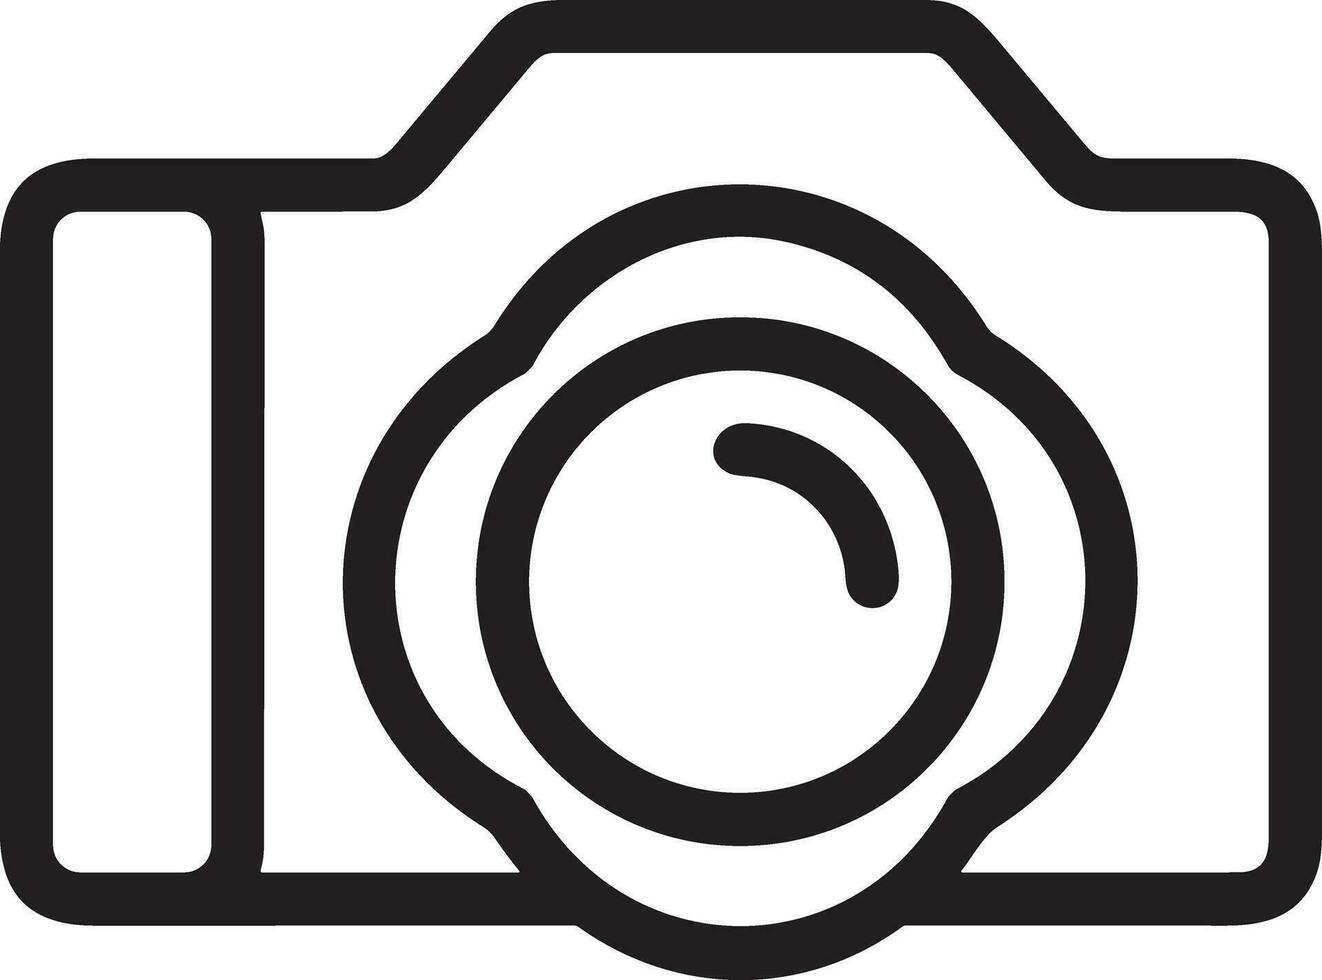 Kamera Fotografie Symbol Symbol Bild Vektor. Illustration von Multimedia fotografisch Linse Grapich Design Bilder vektor